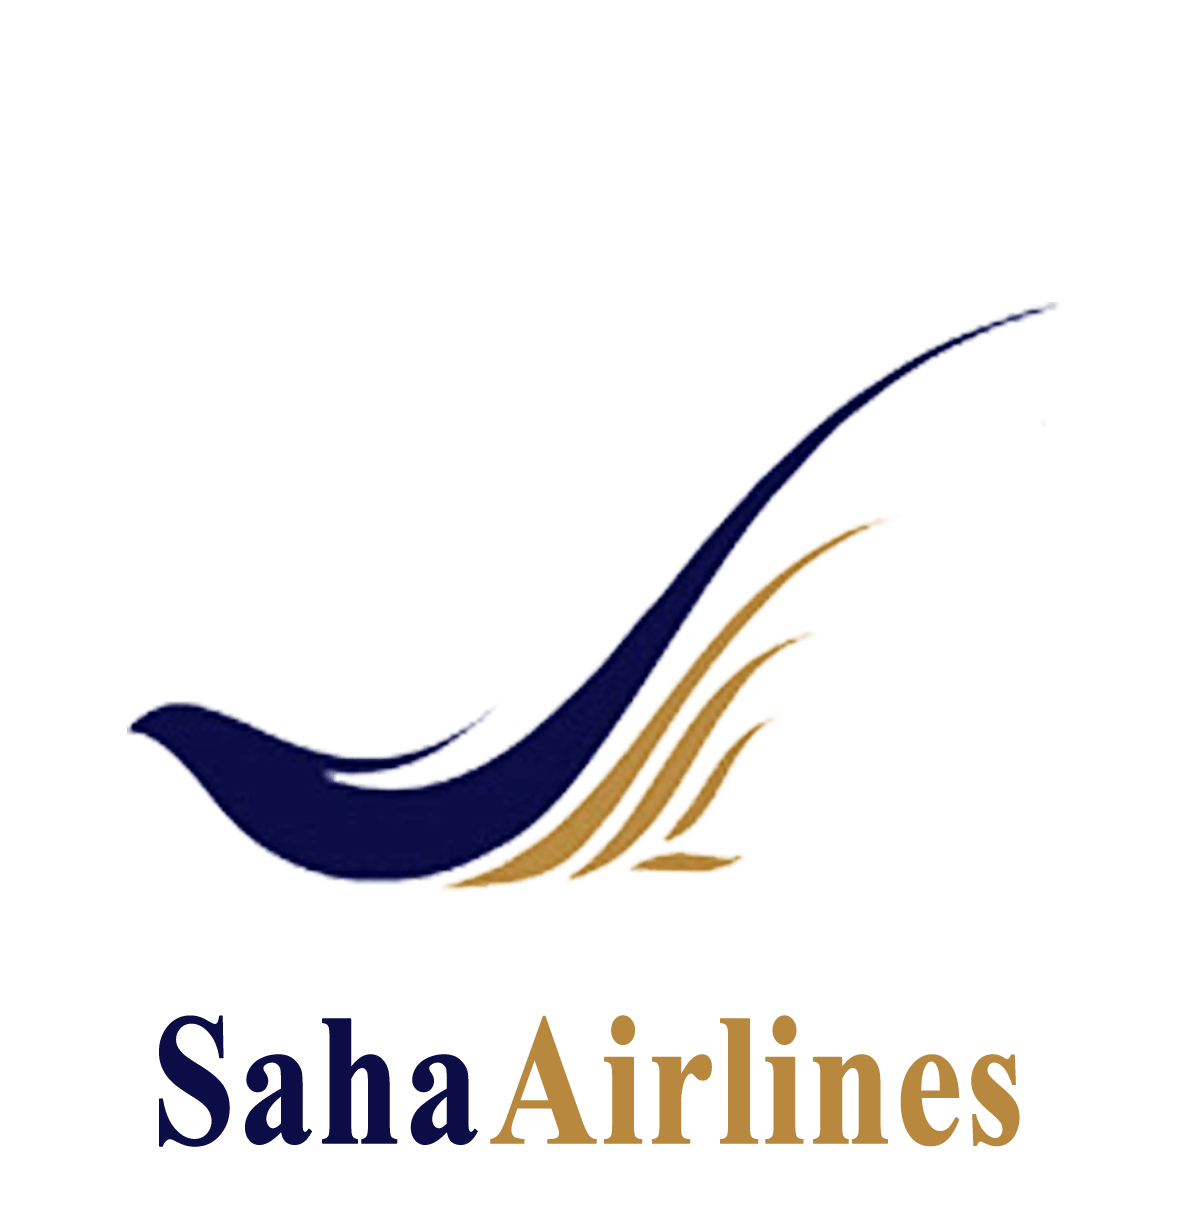 Saha Airlines